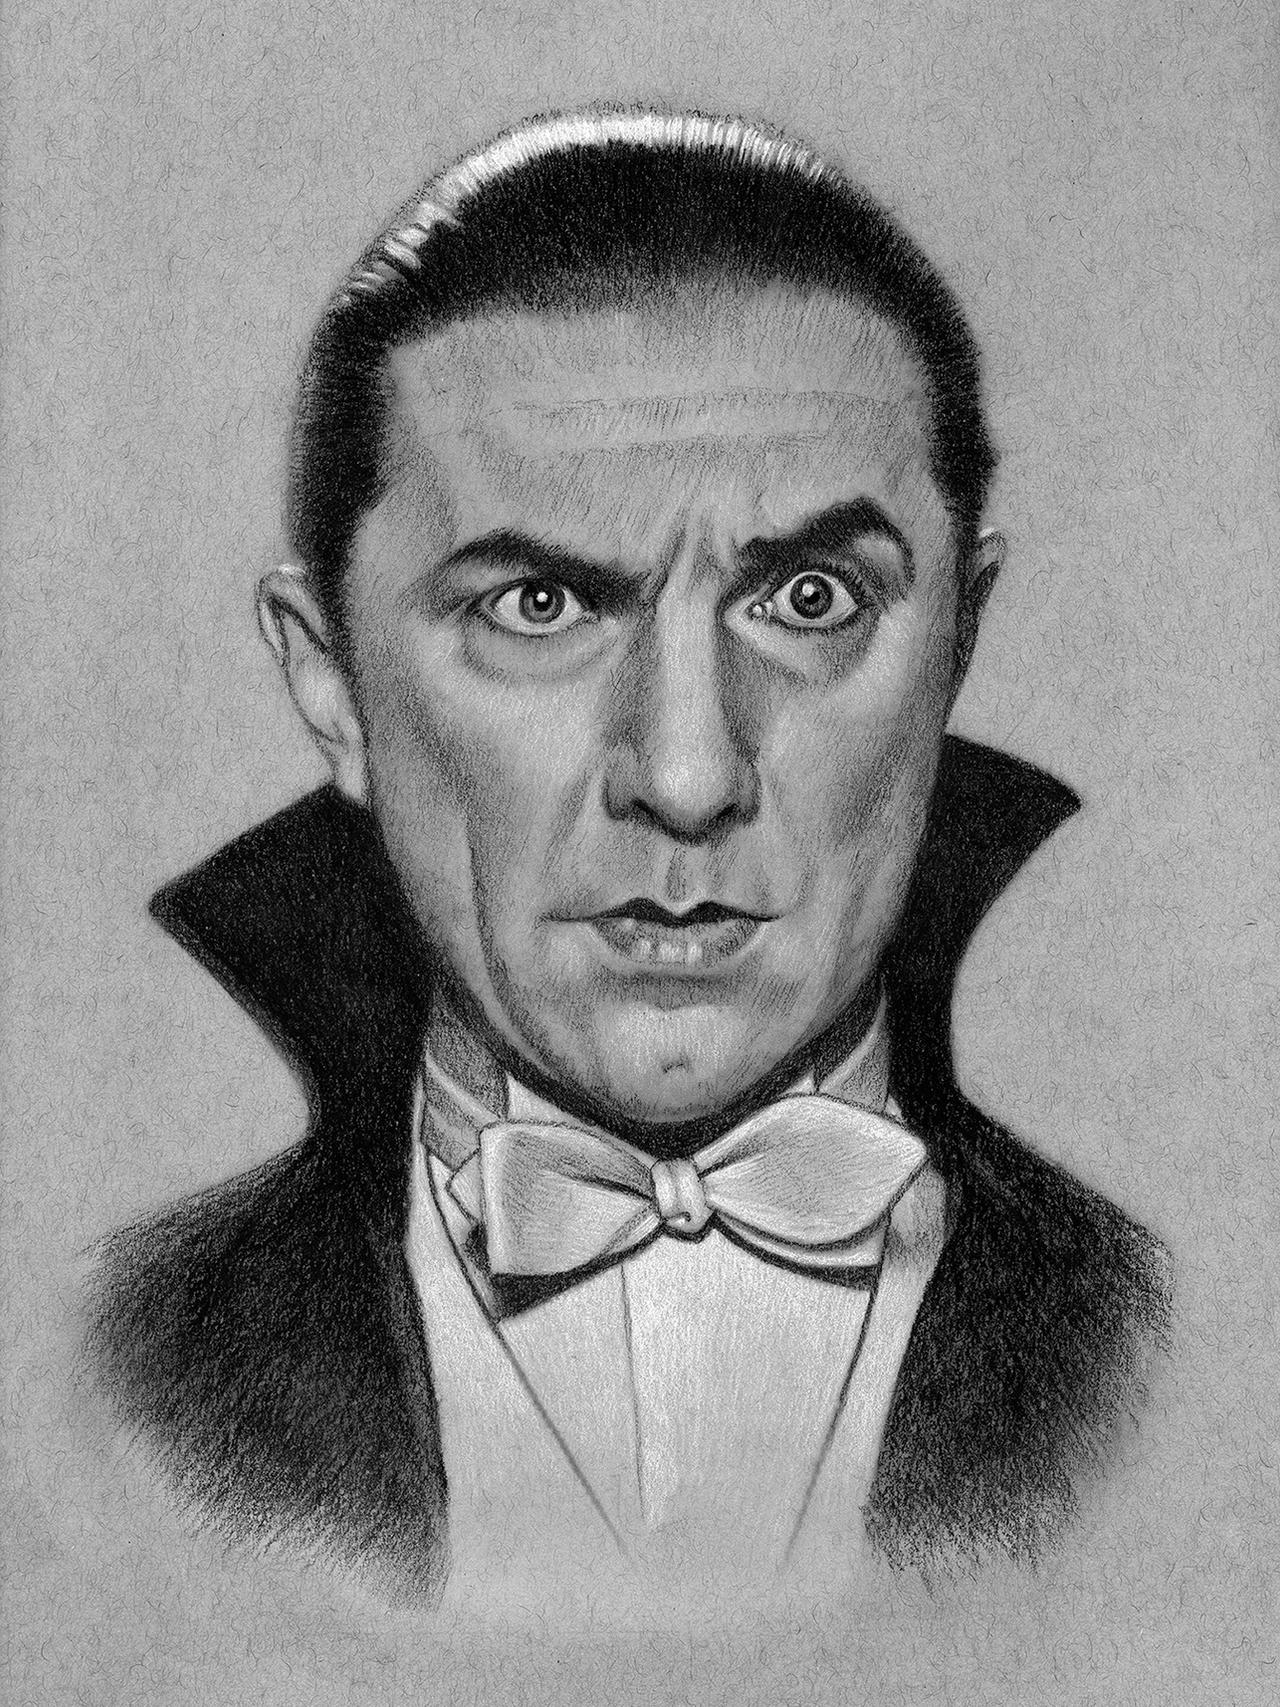 Dracula drawing by artbyshub on DeviantArt